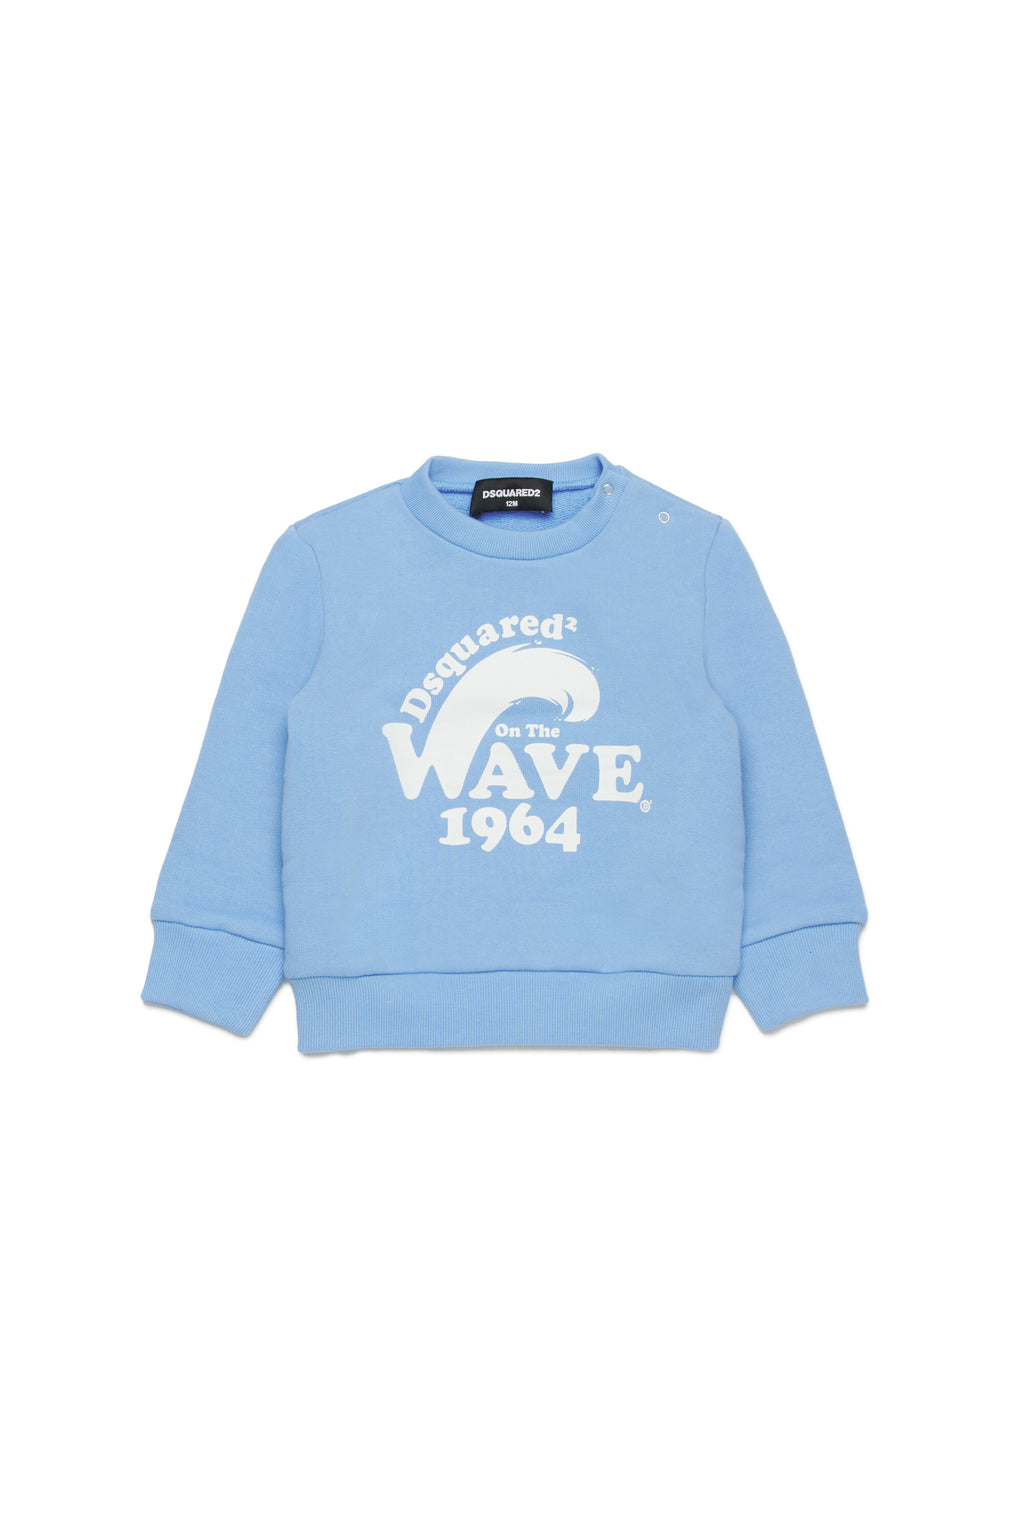 Crew-neck sweatshirt with Wave 1964 graphics